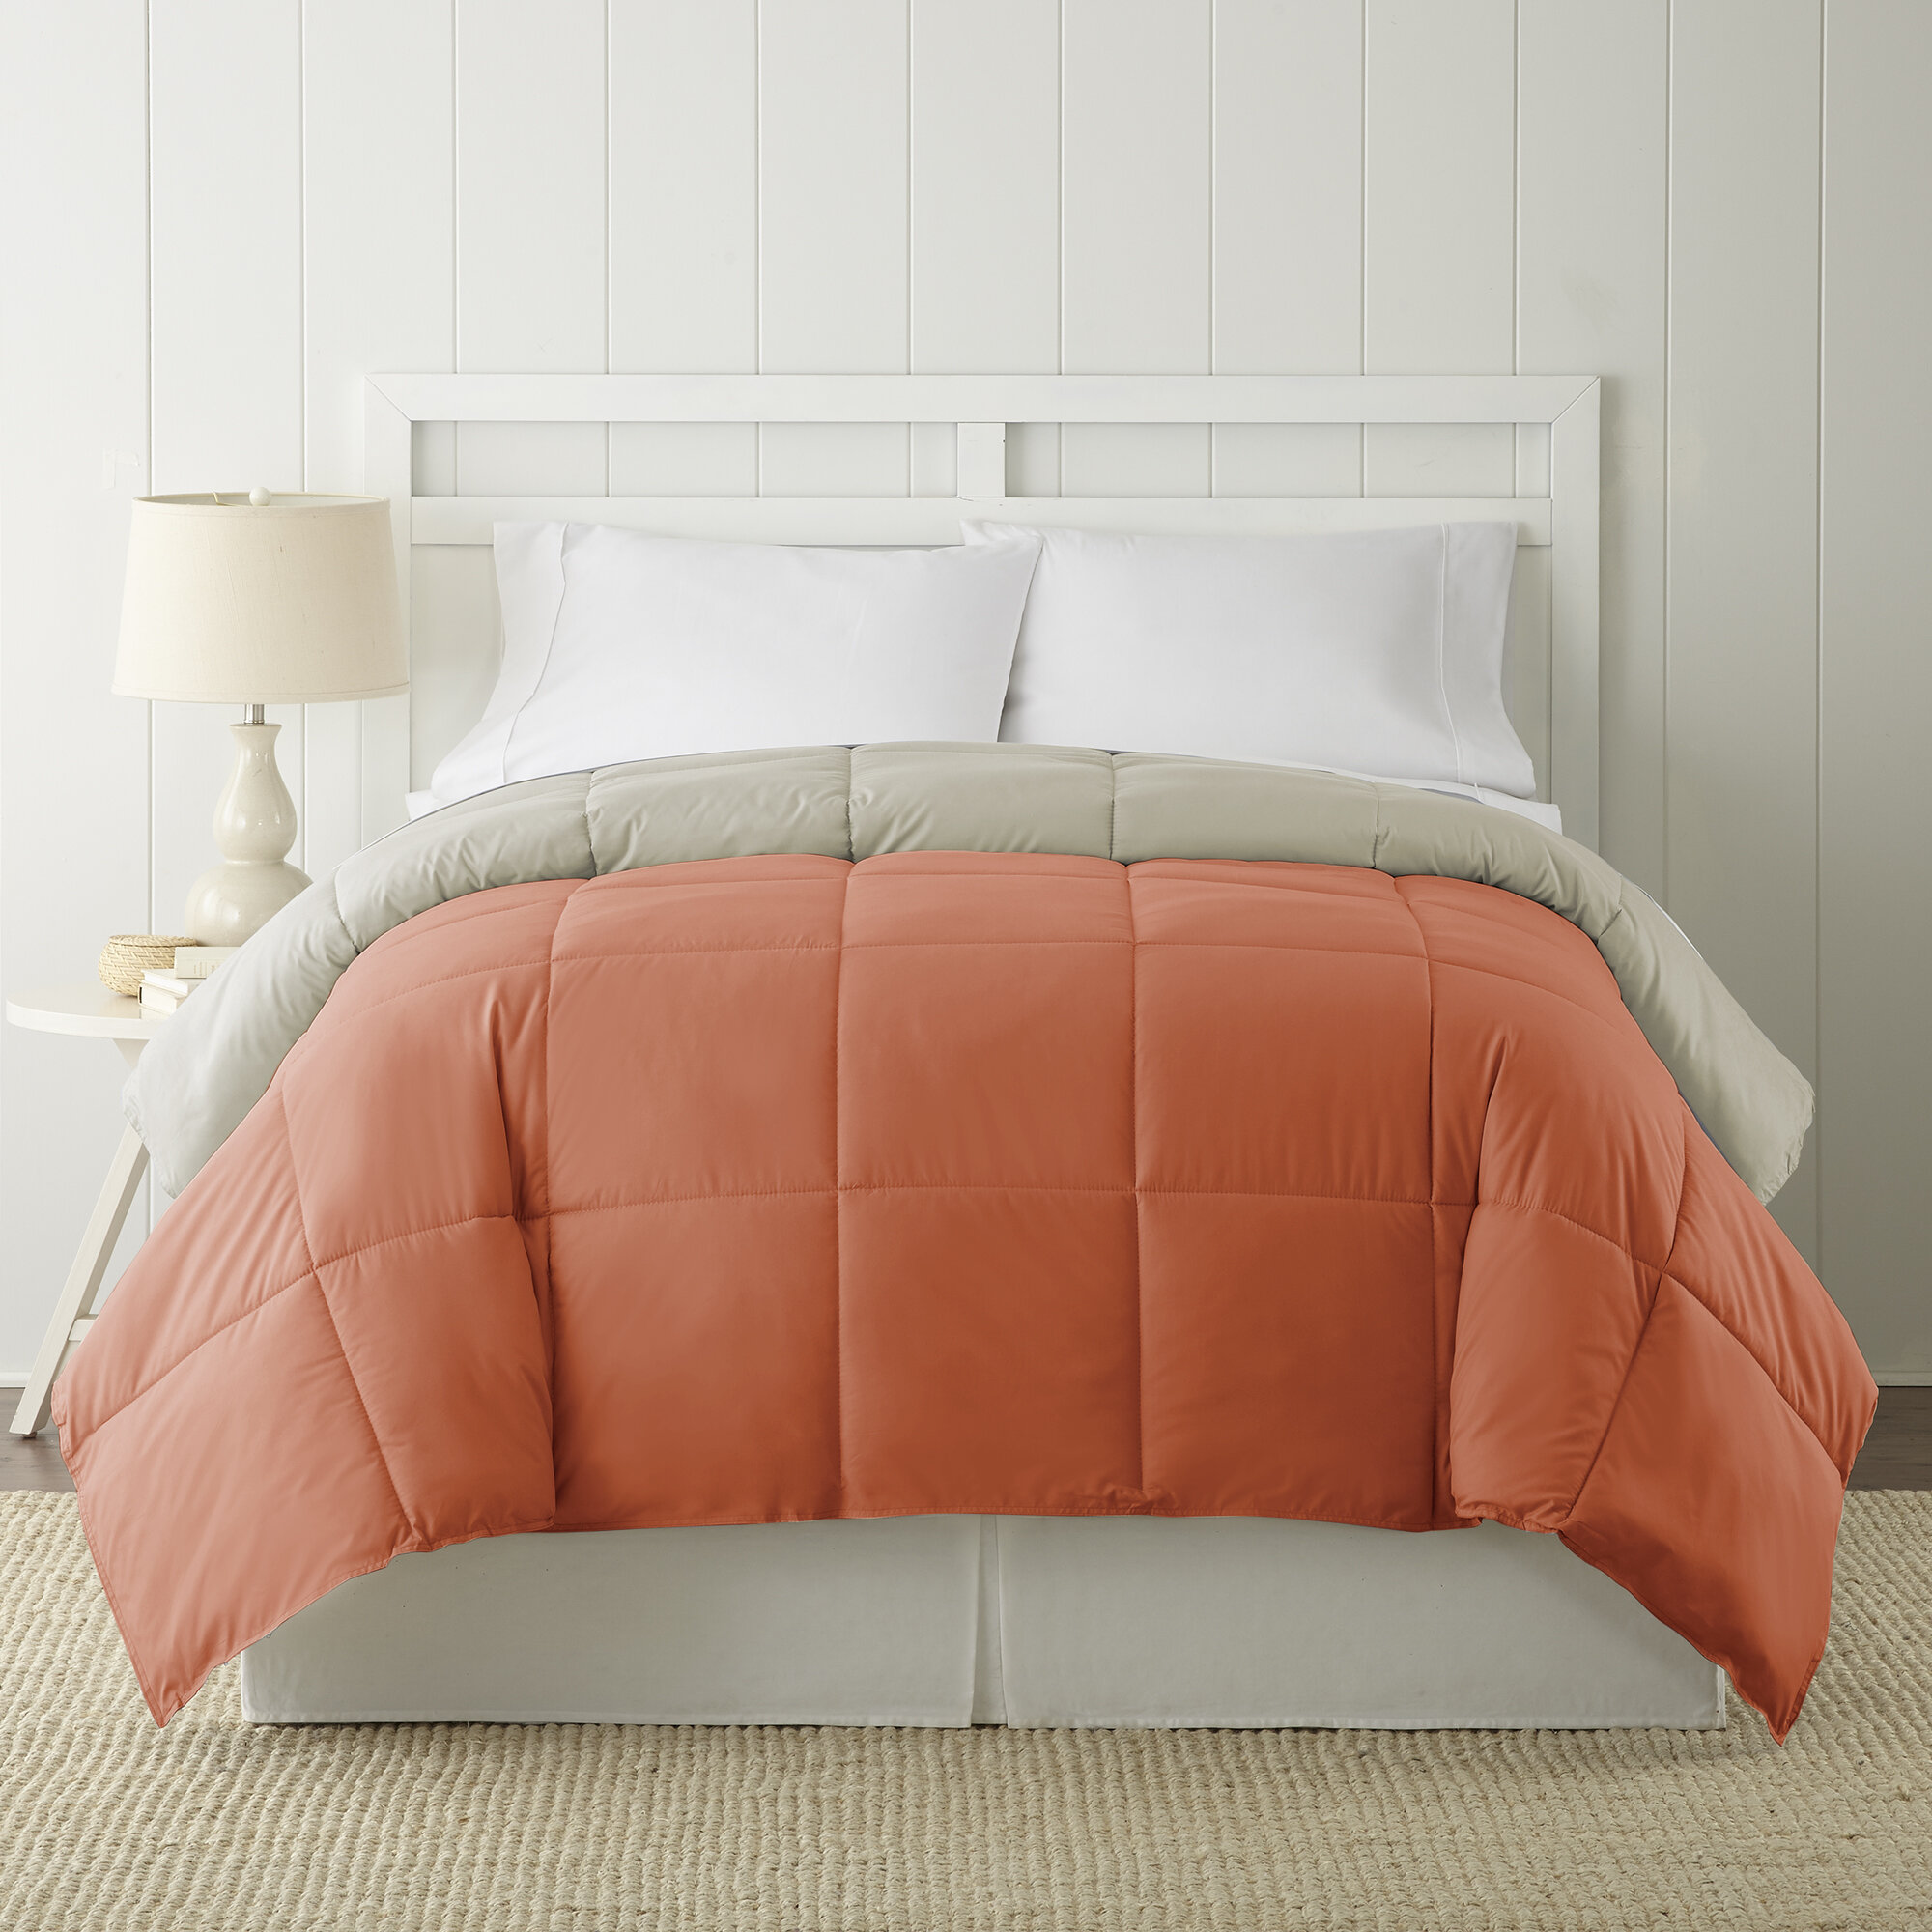 Details about   Tremendous All Season Down Alternative Comforter Orange Solid US Queen Size 